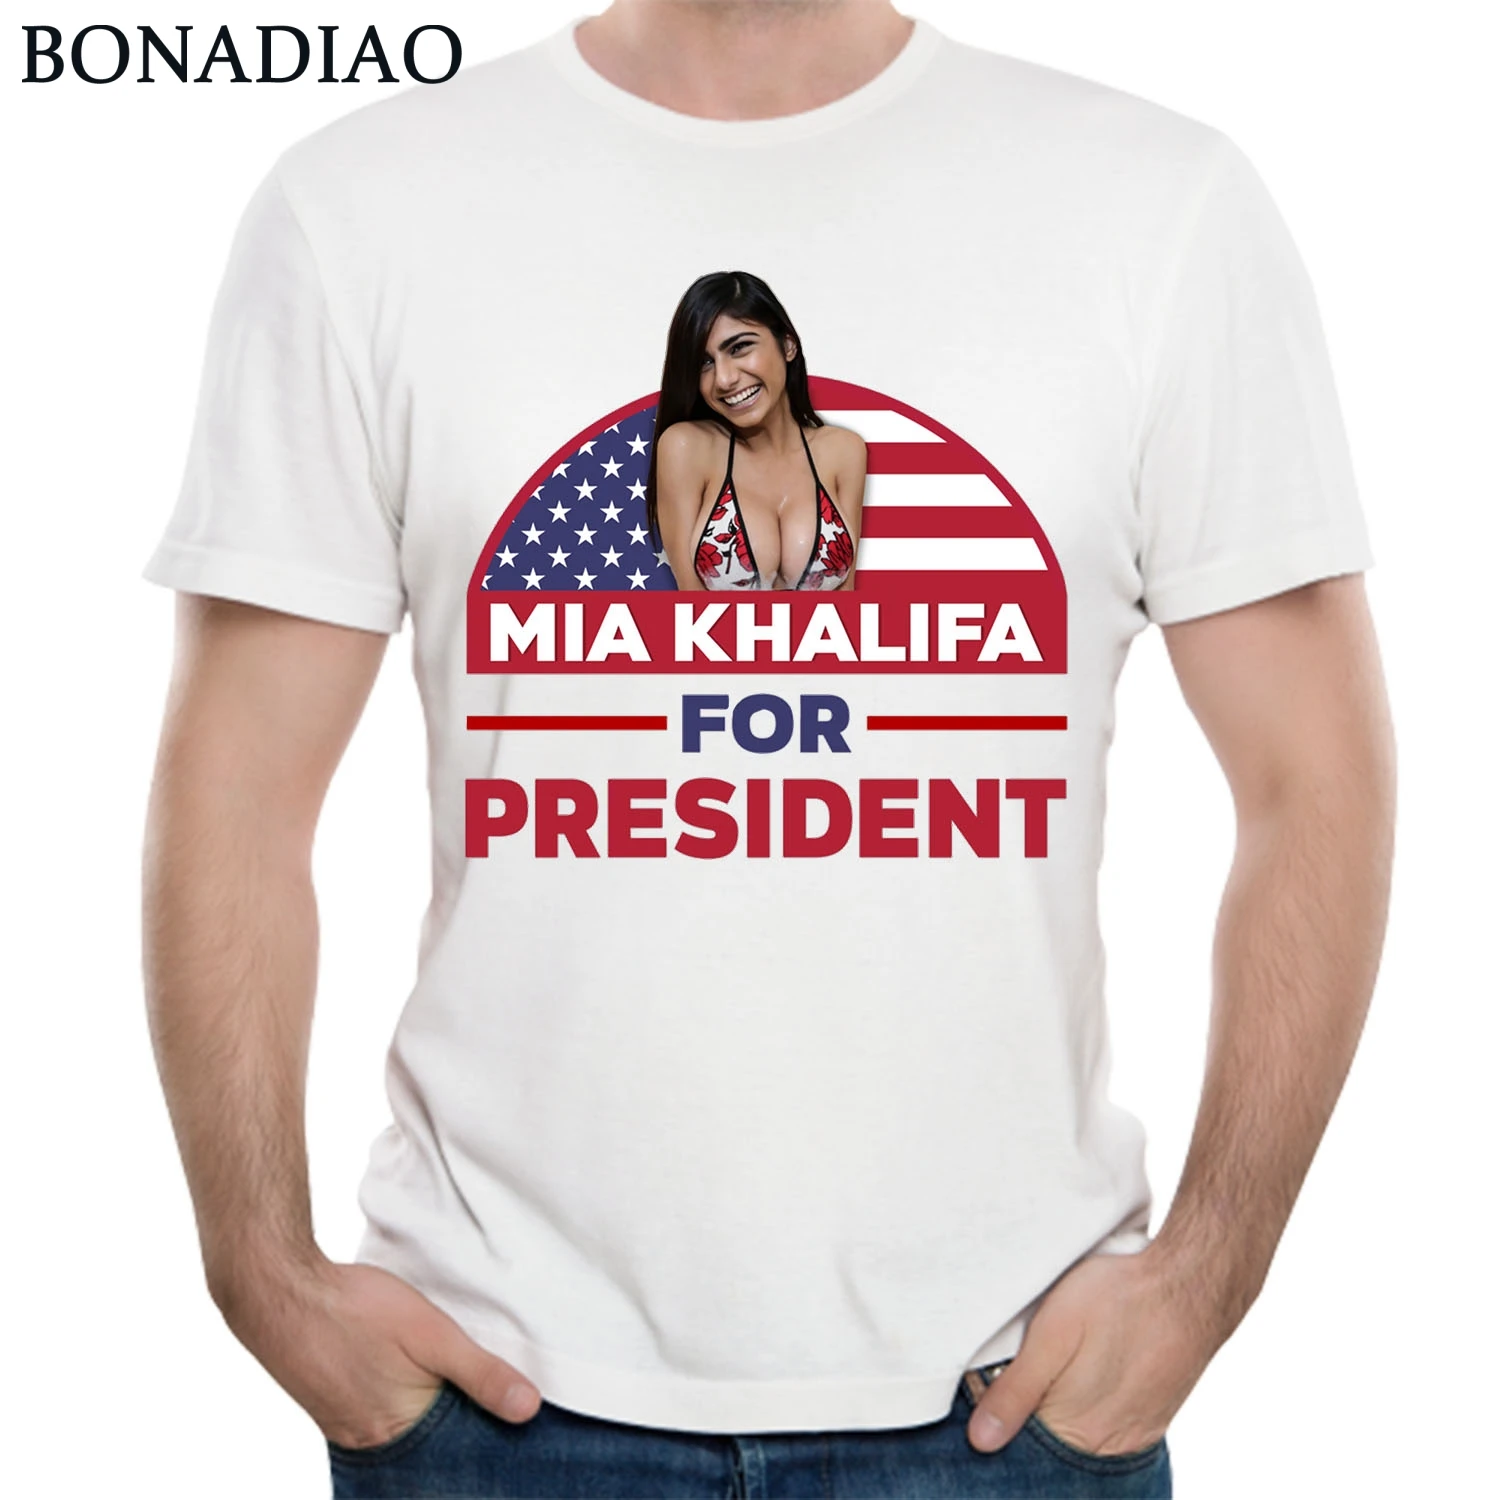 Миа Халифа для президента футболка сексуальная порно звезда футболки для мужчин летняя хлопковая футболка - Цвет: white